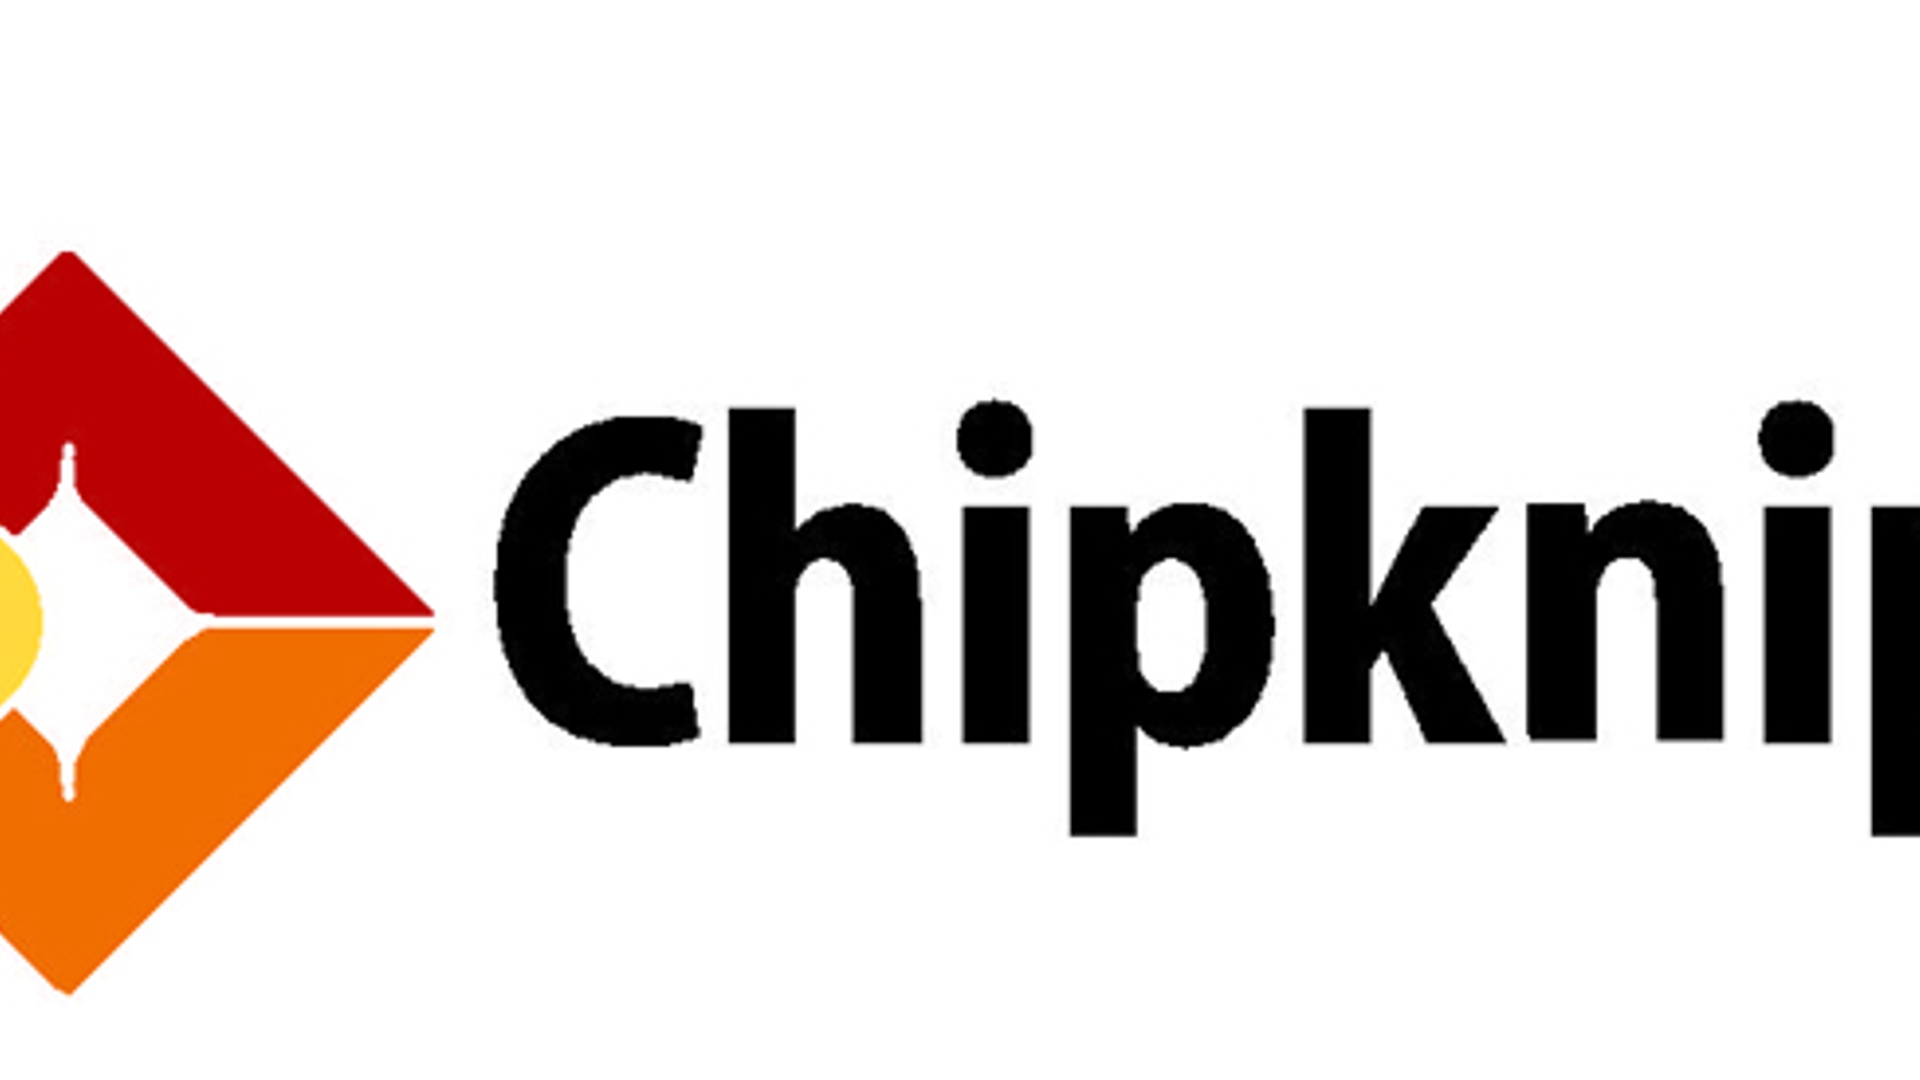 chipknip_logo_02.jpg